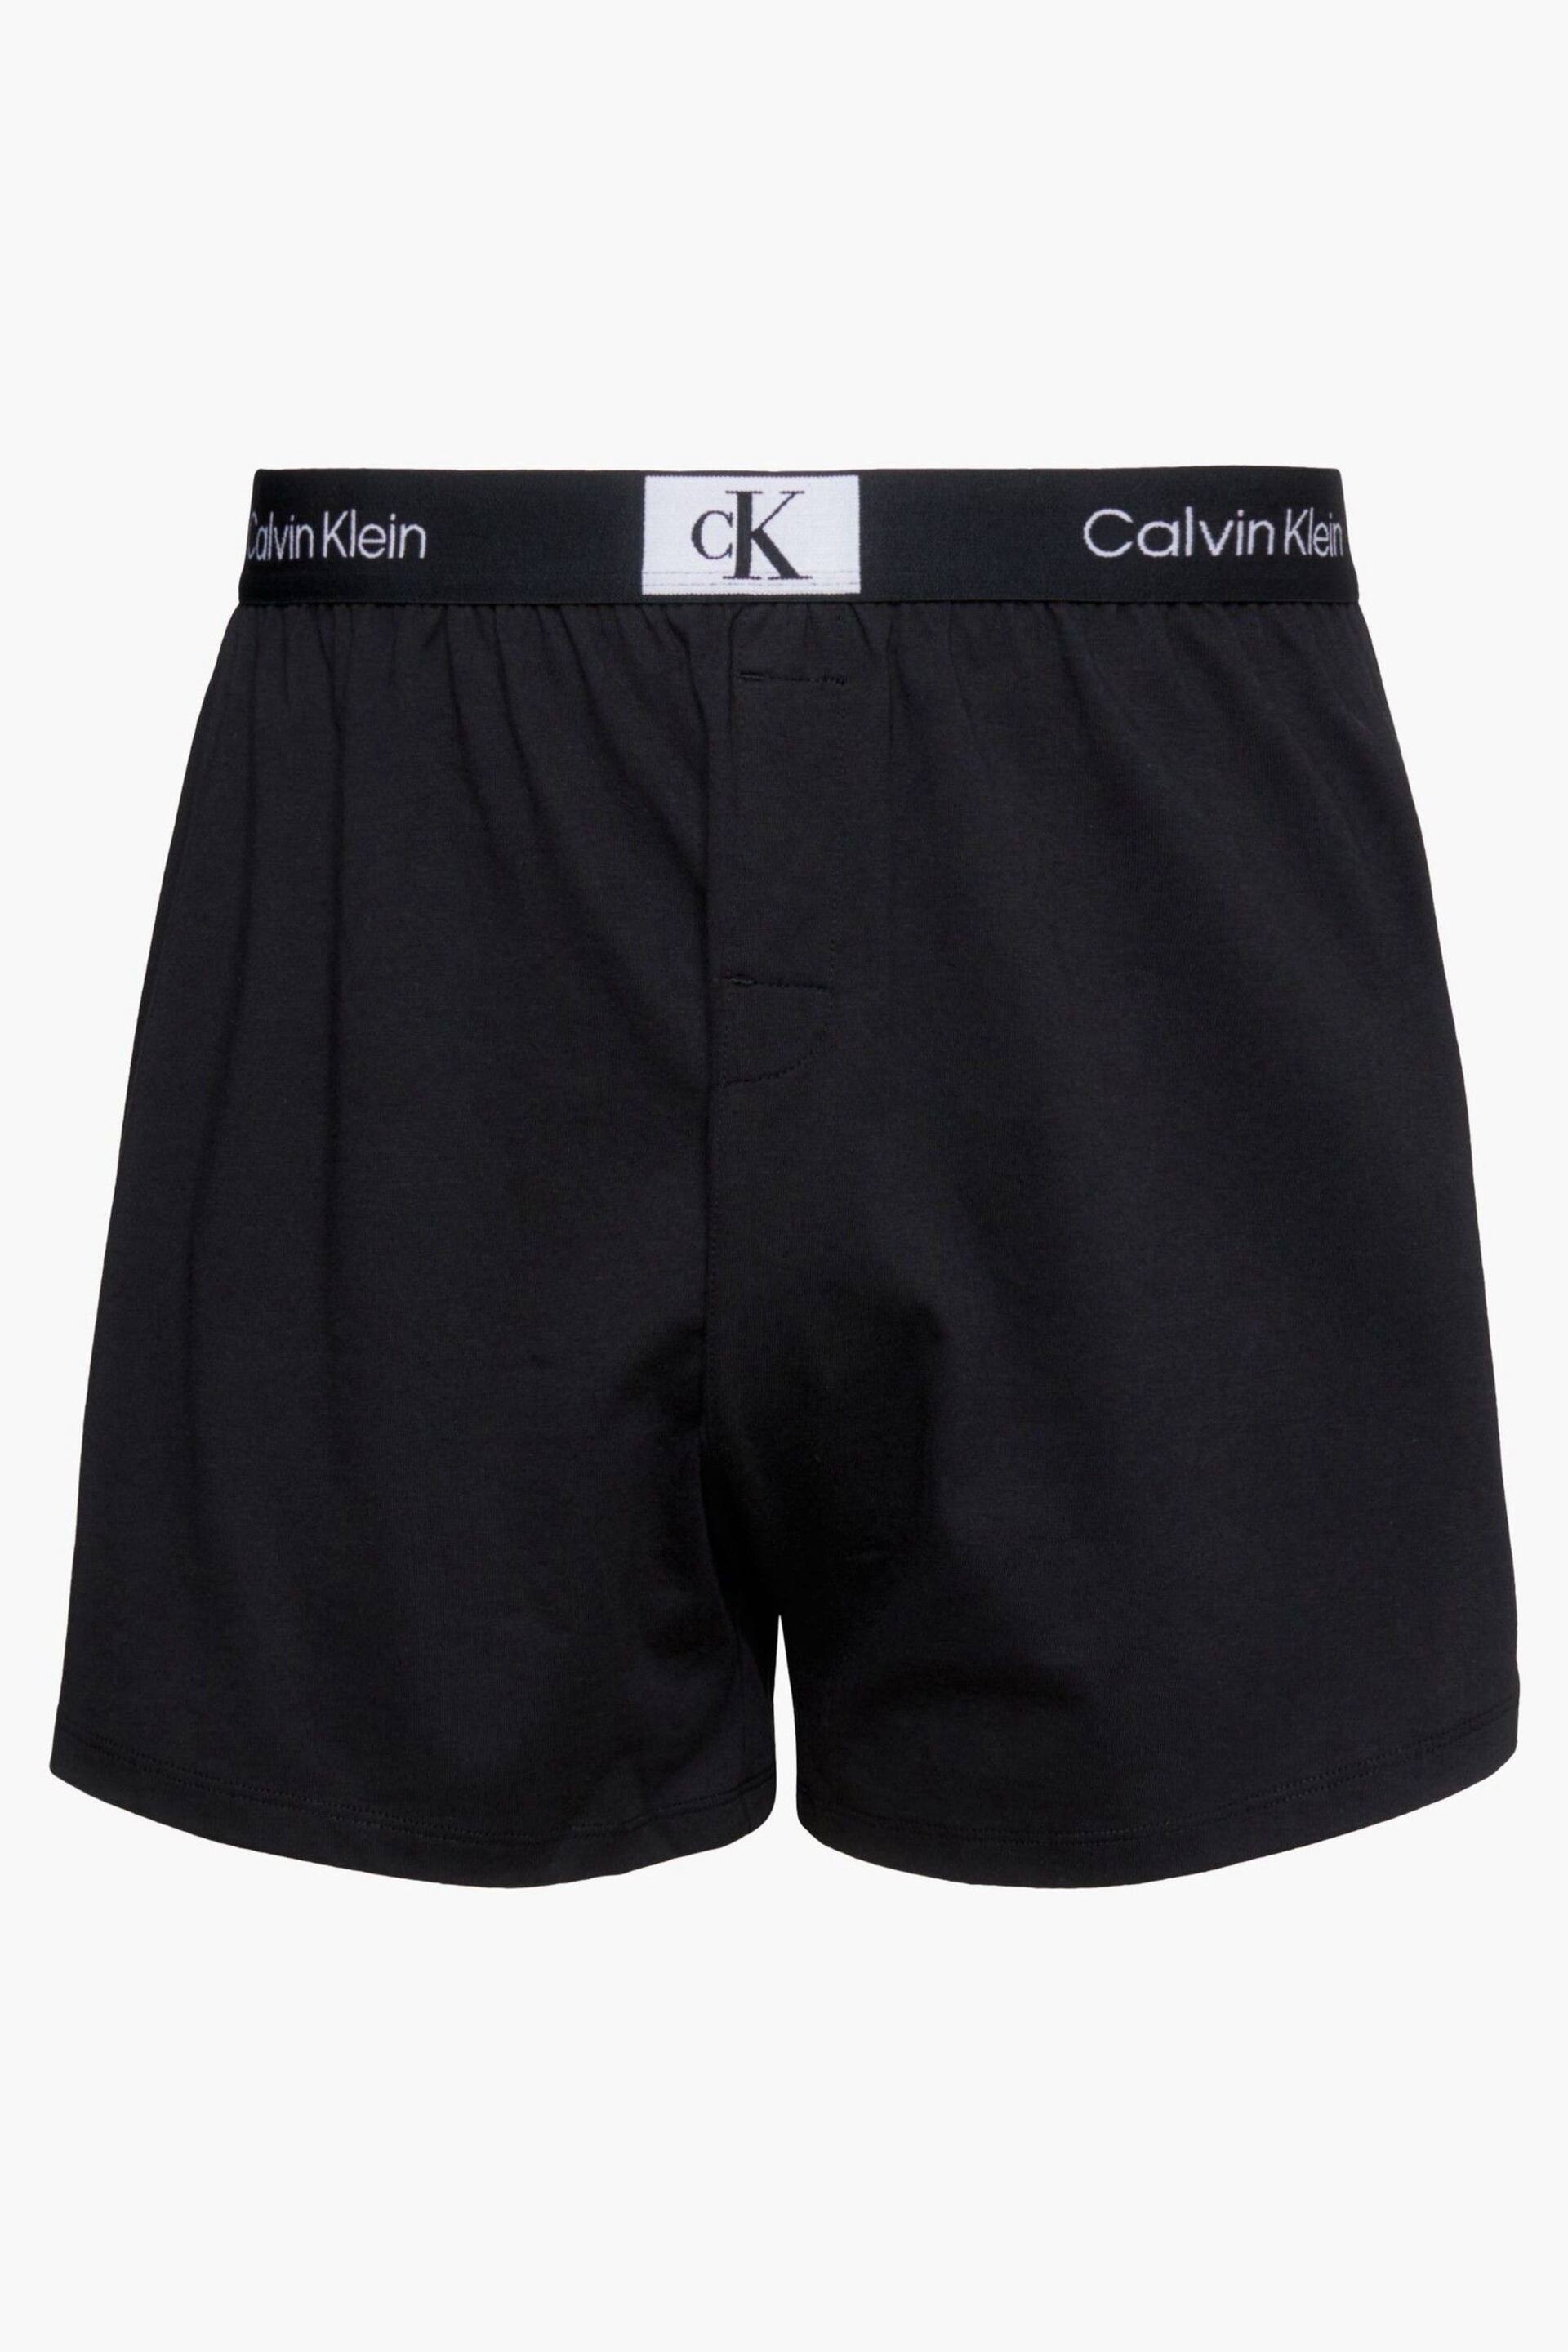 Calvin Klein Black Sleep Shorts - Image 4 of 5